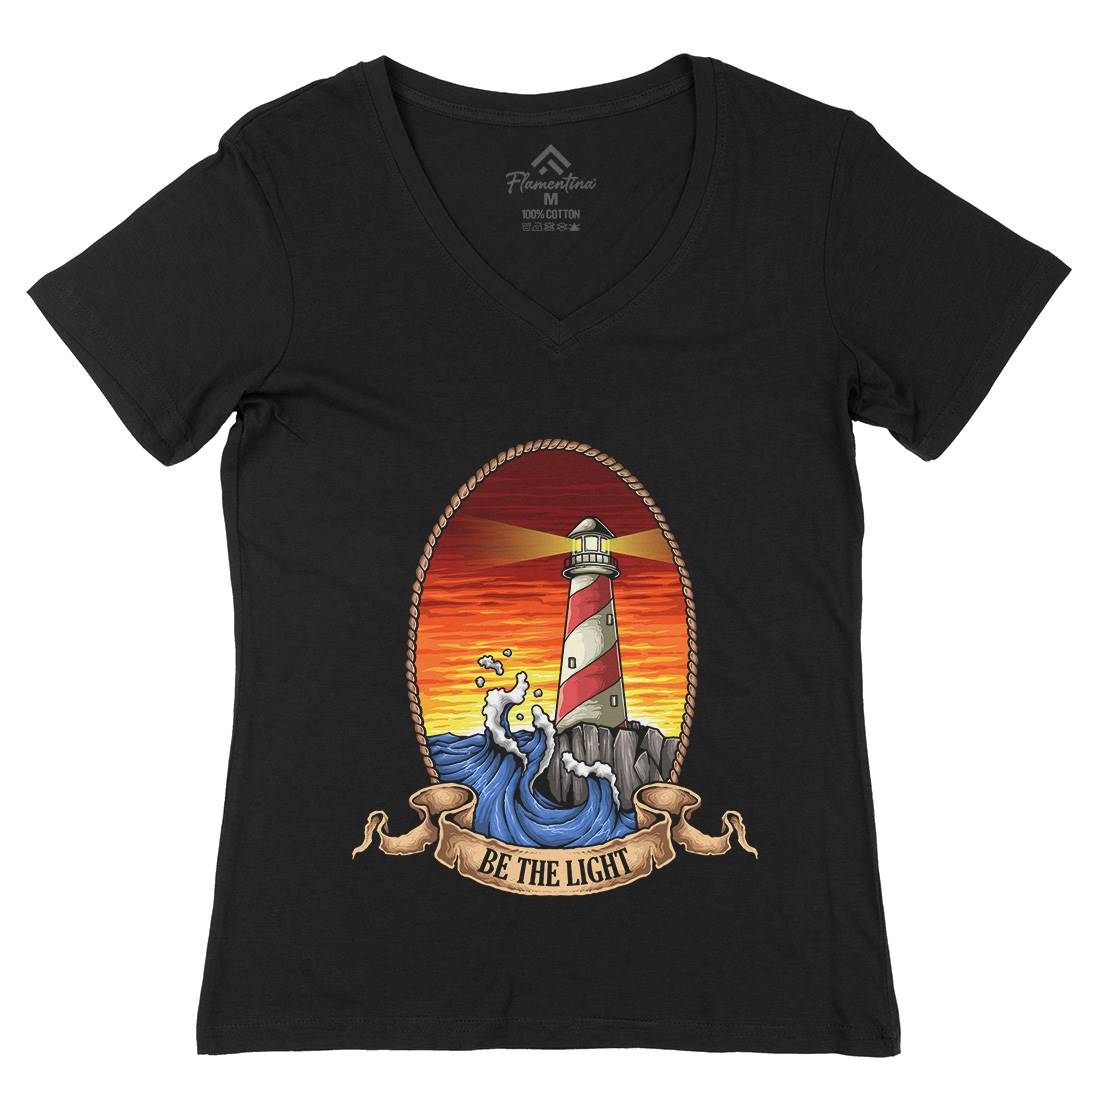 Lighthouse Womens Organic V-Neck T-Shirt Navy A433